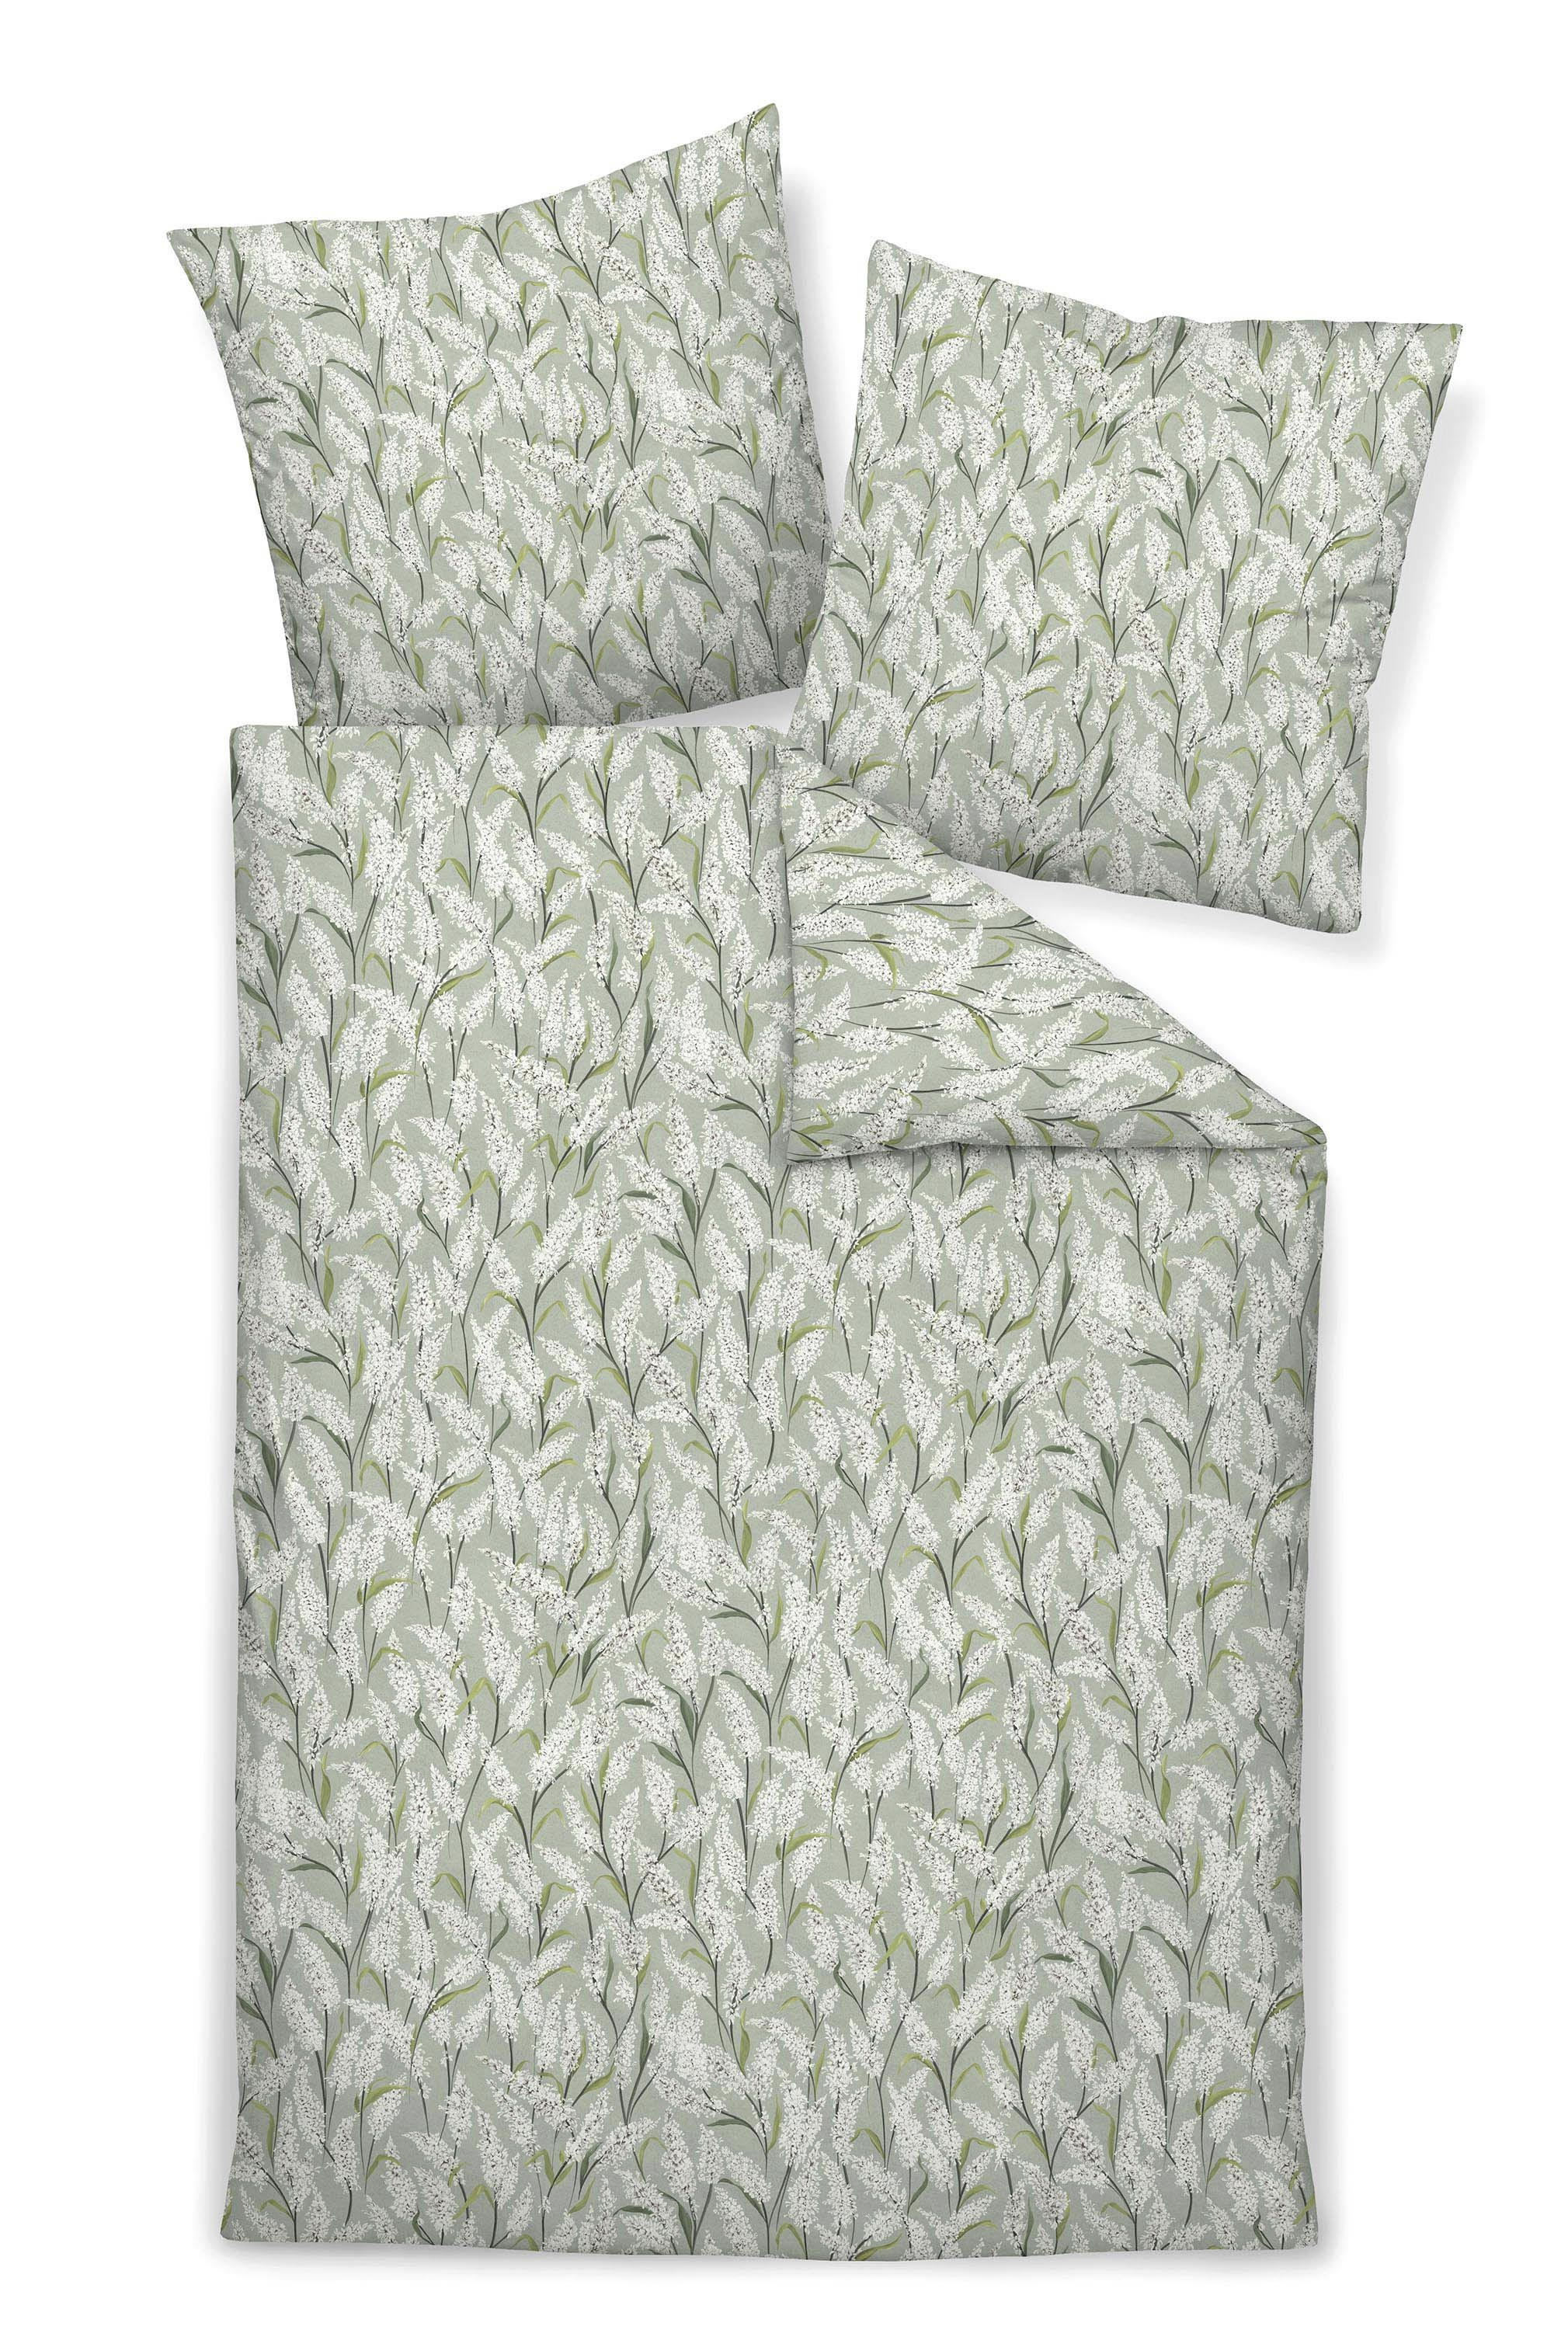 BETTWÄSCHE MESSINA Makosatin  - Salbeigrün, Basics, Textil (135/200cm) - Janine